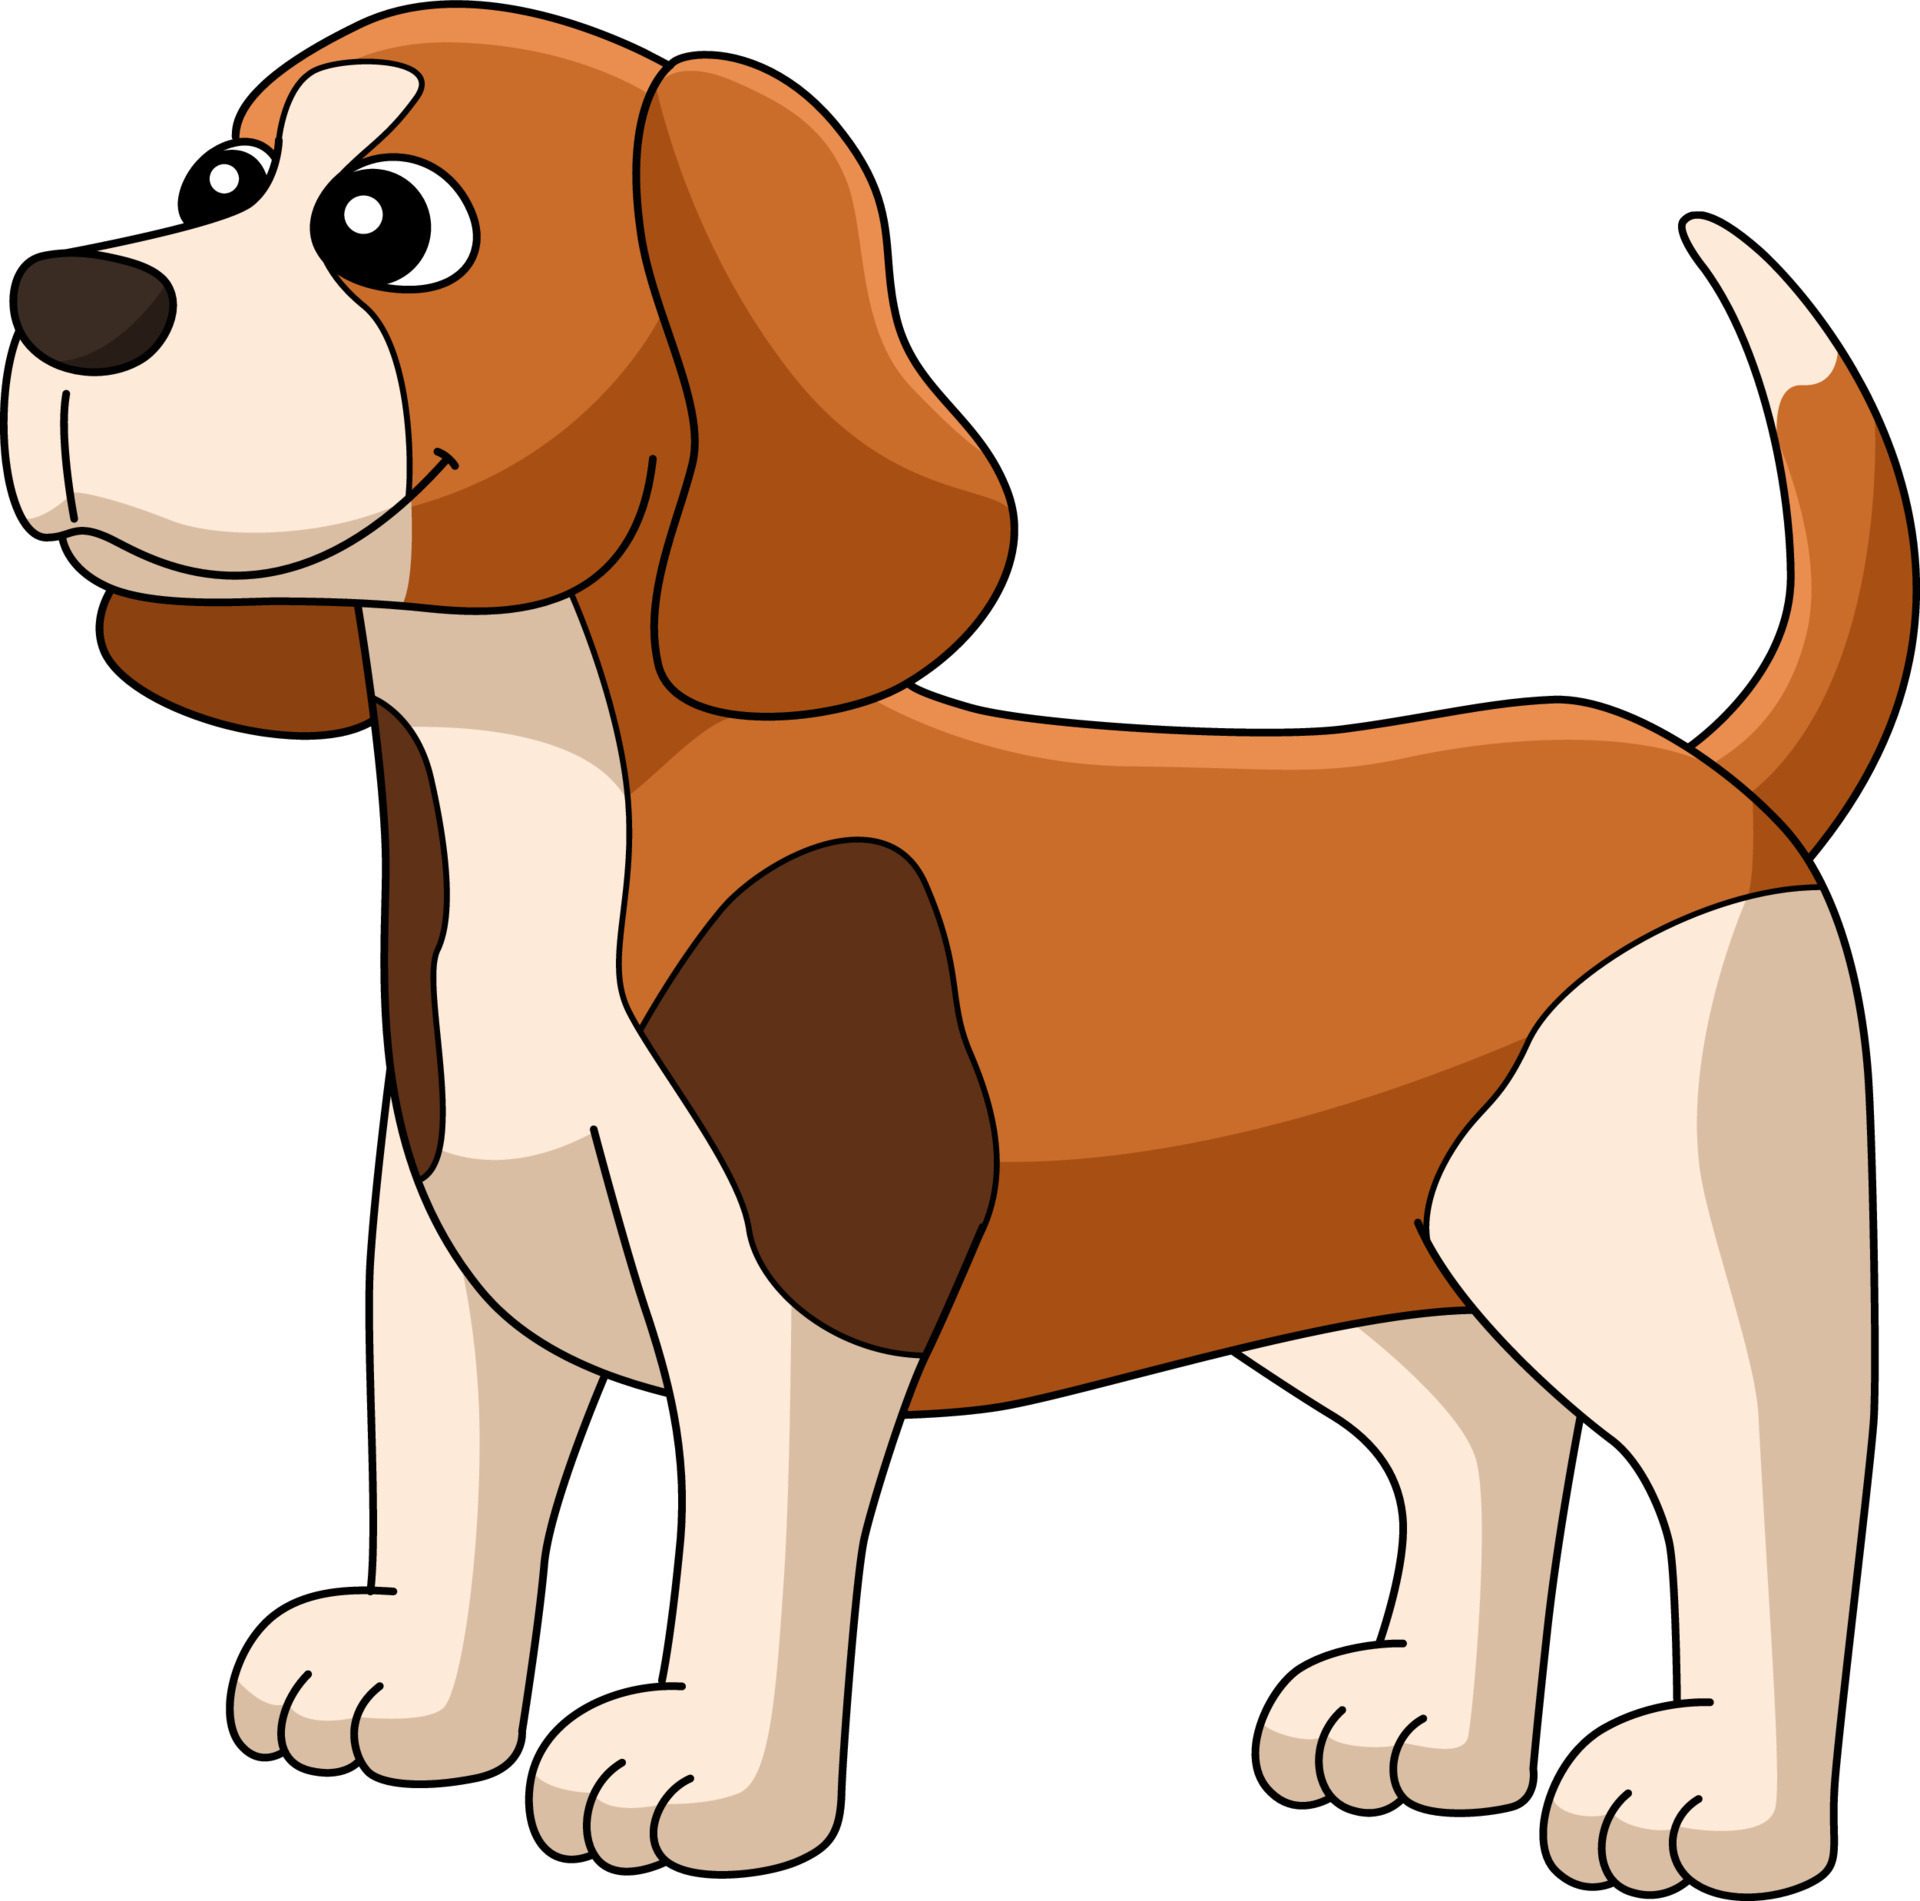 beagle hund cartoon farbige illustration 8208892 Vektor Kunst bei Vecteezy